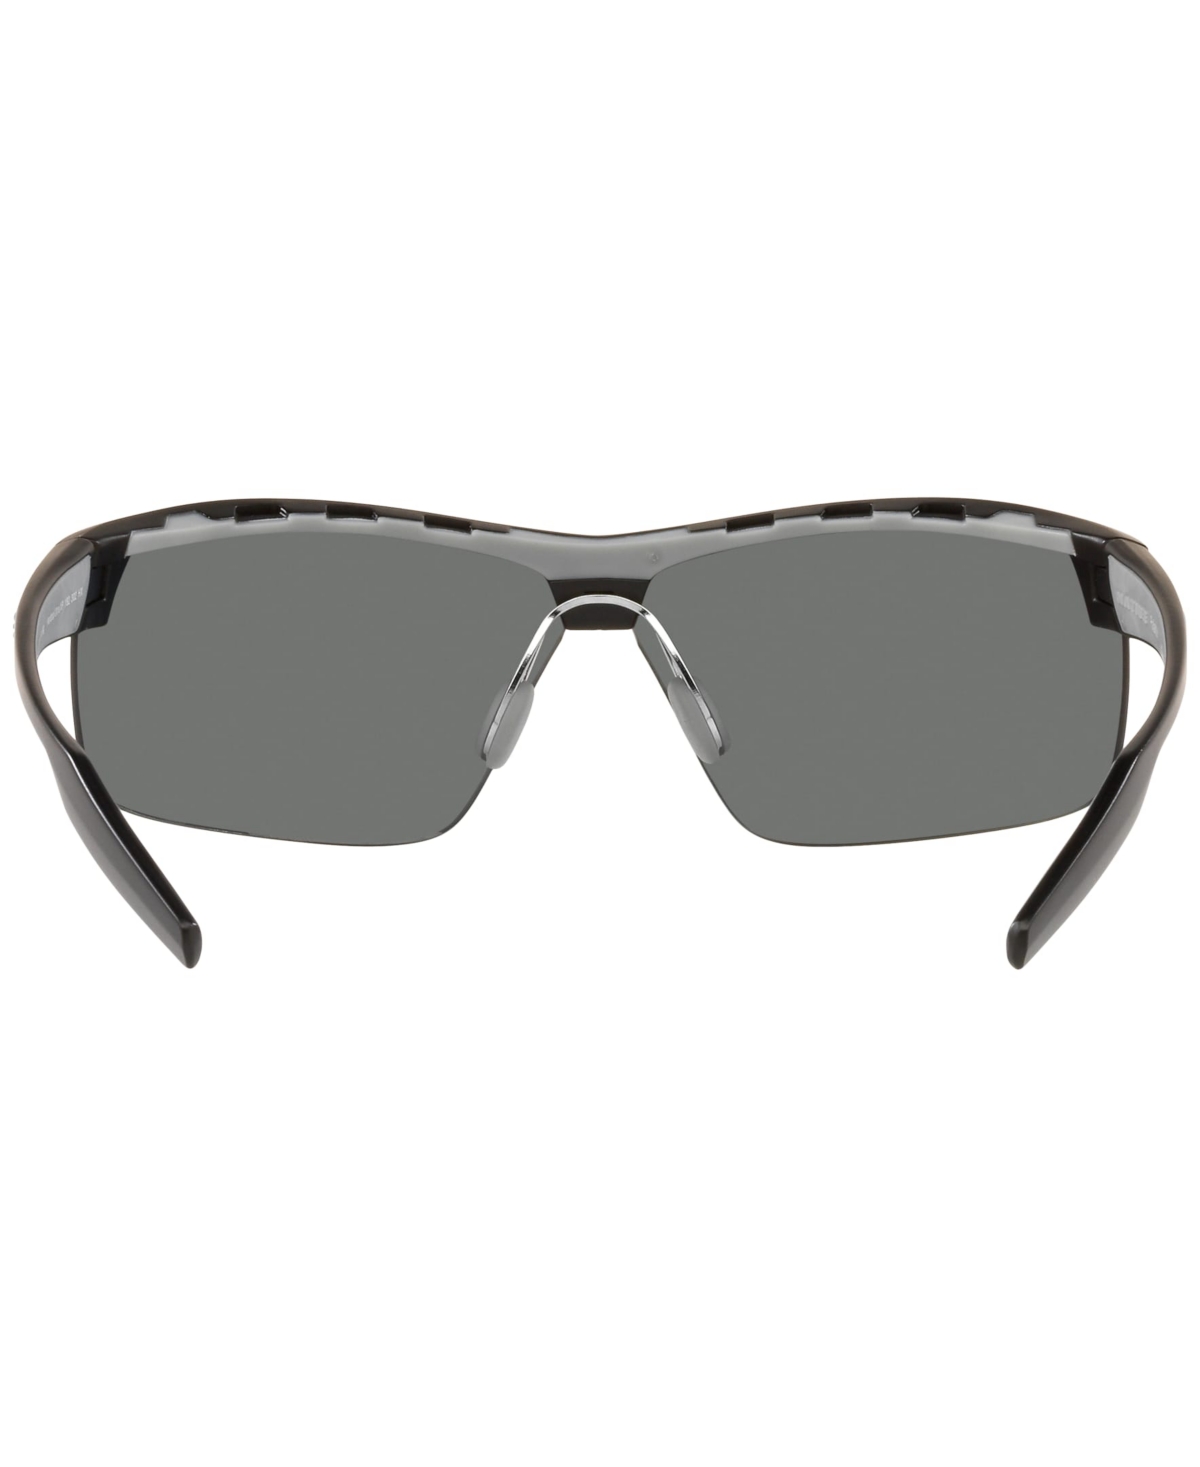 Shop Native Eyewear Native Men's Hardtop Ultra Xp Polarized Sunglasses, Polar Xd9026 In Matte Black